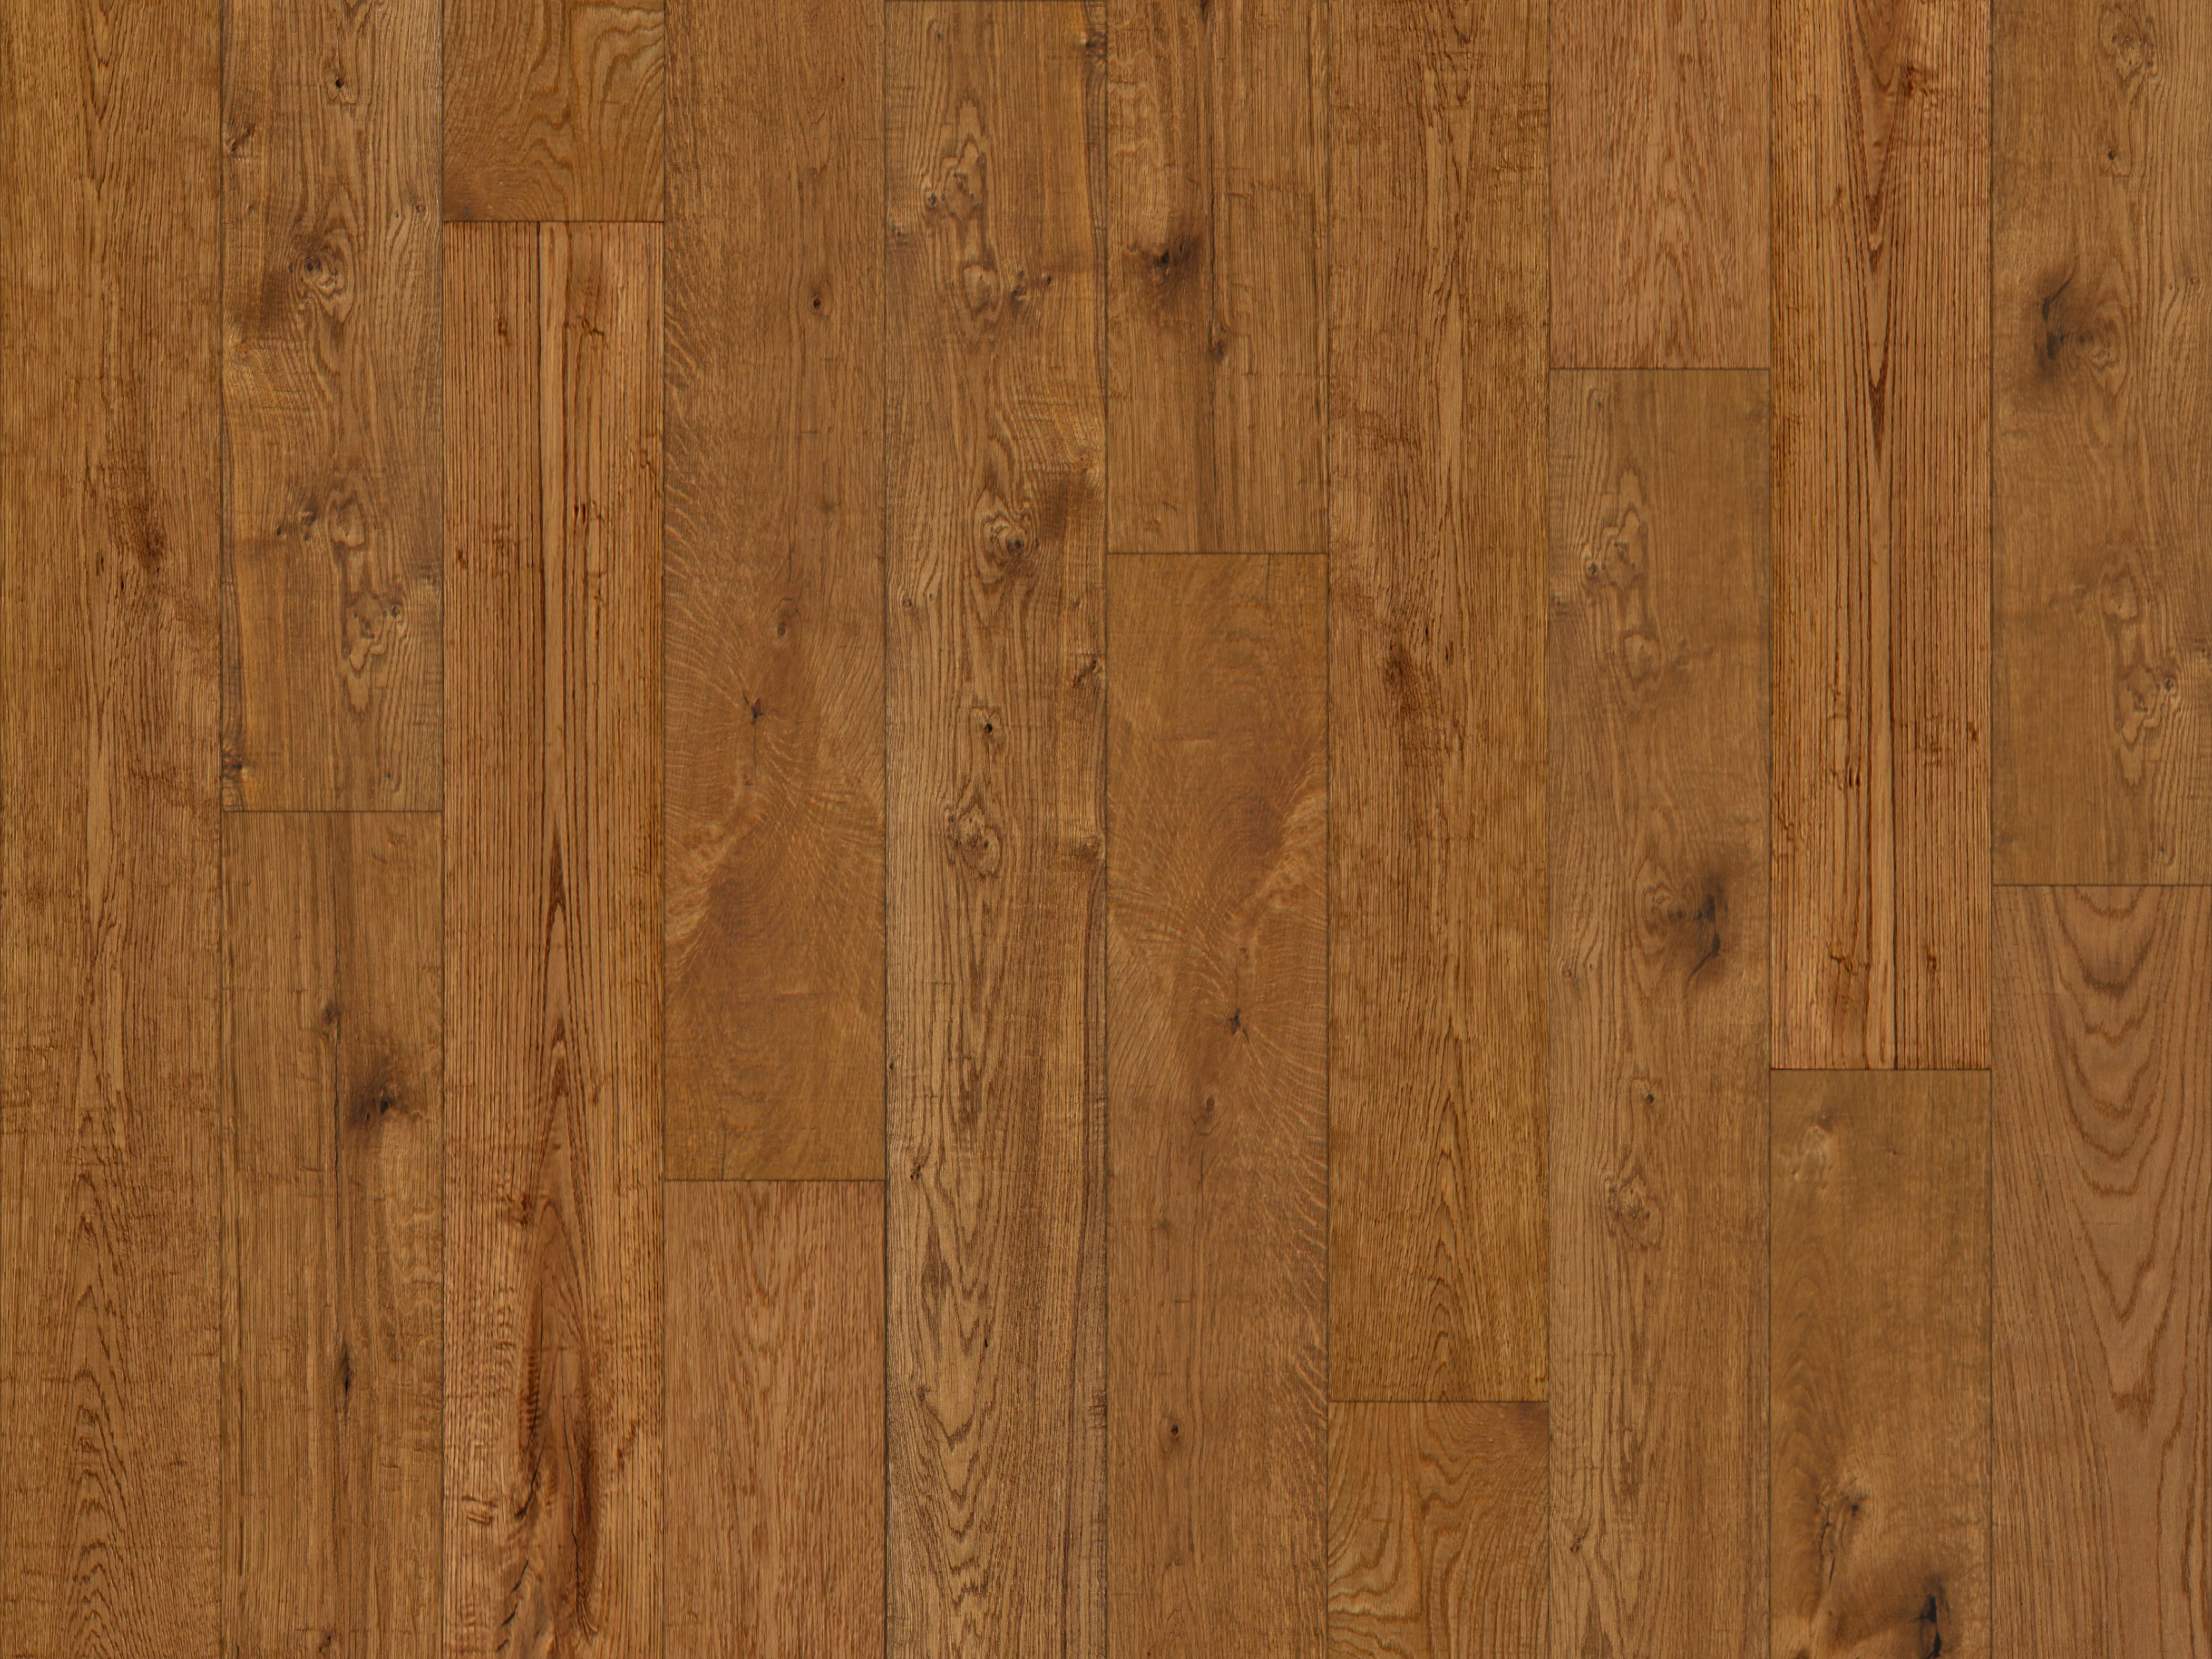 duchateau signature strata flint european oak engineered hardnatural wood floor hard wax oil finish for interior use distributed by surface group international